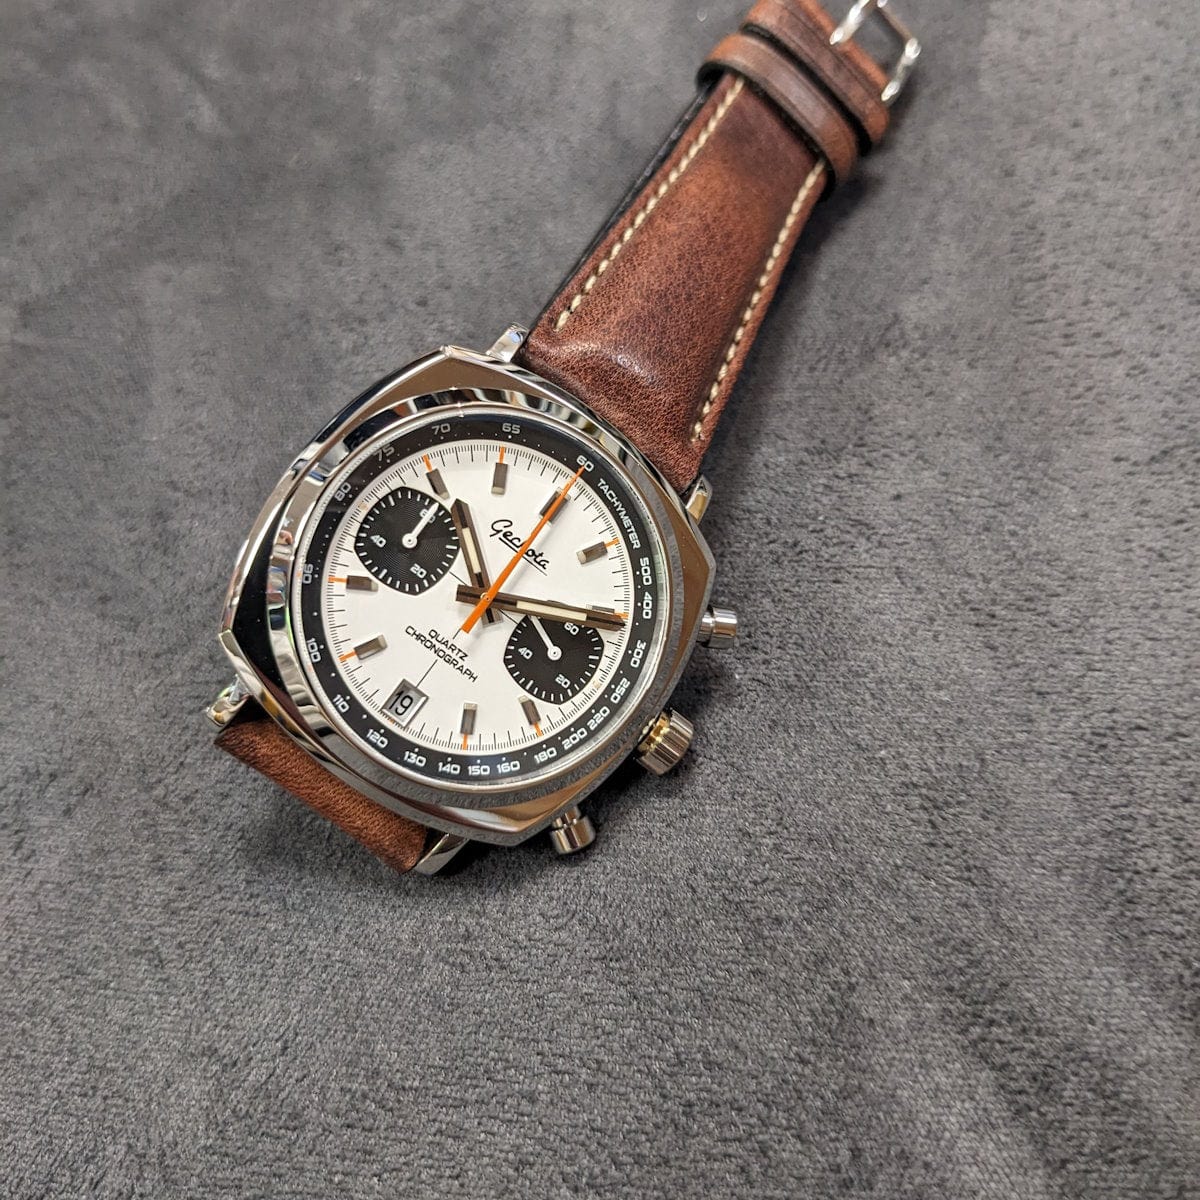 Geckota Chronotimer Racing Chronograph Watch Racing Panda Dial TP-369-2 - NEARLY NEW